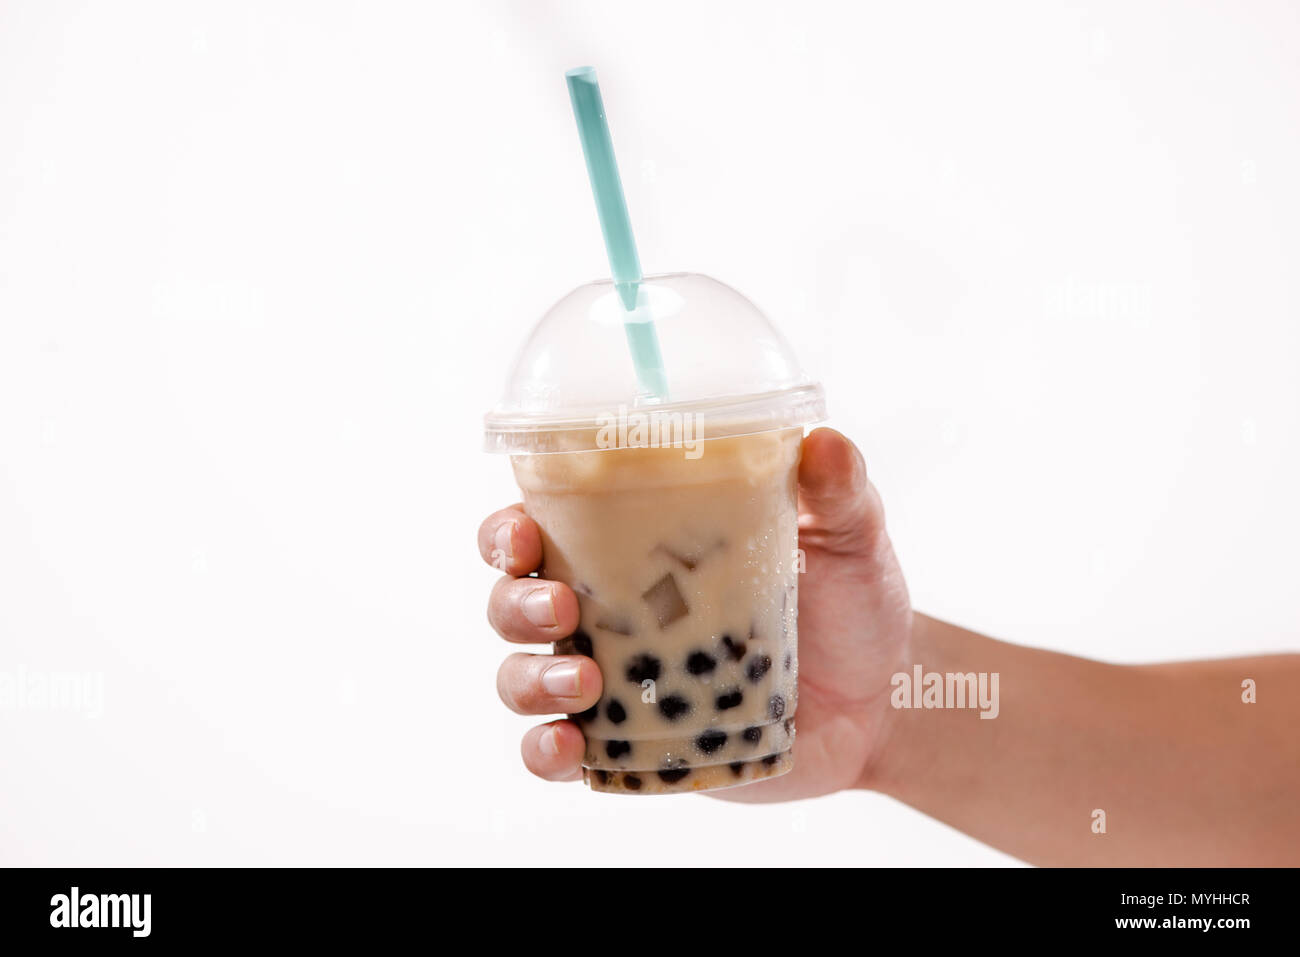 https://c8.alamy.com/comp/MYHHCR/holding-a-plastic-glass-of-refreshing-taiwan-iced-milk-tea-with-bubble-boba-MYHHCR.jpg